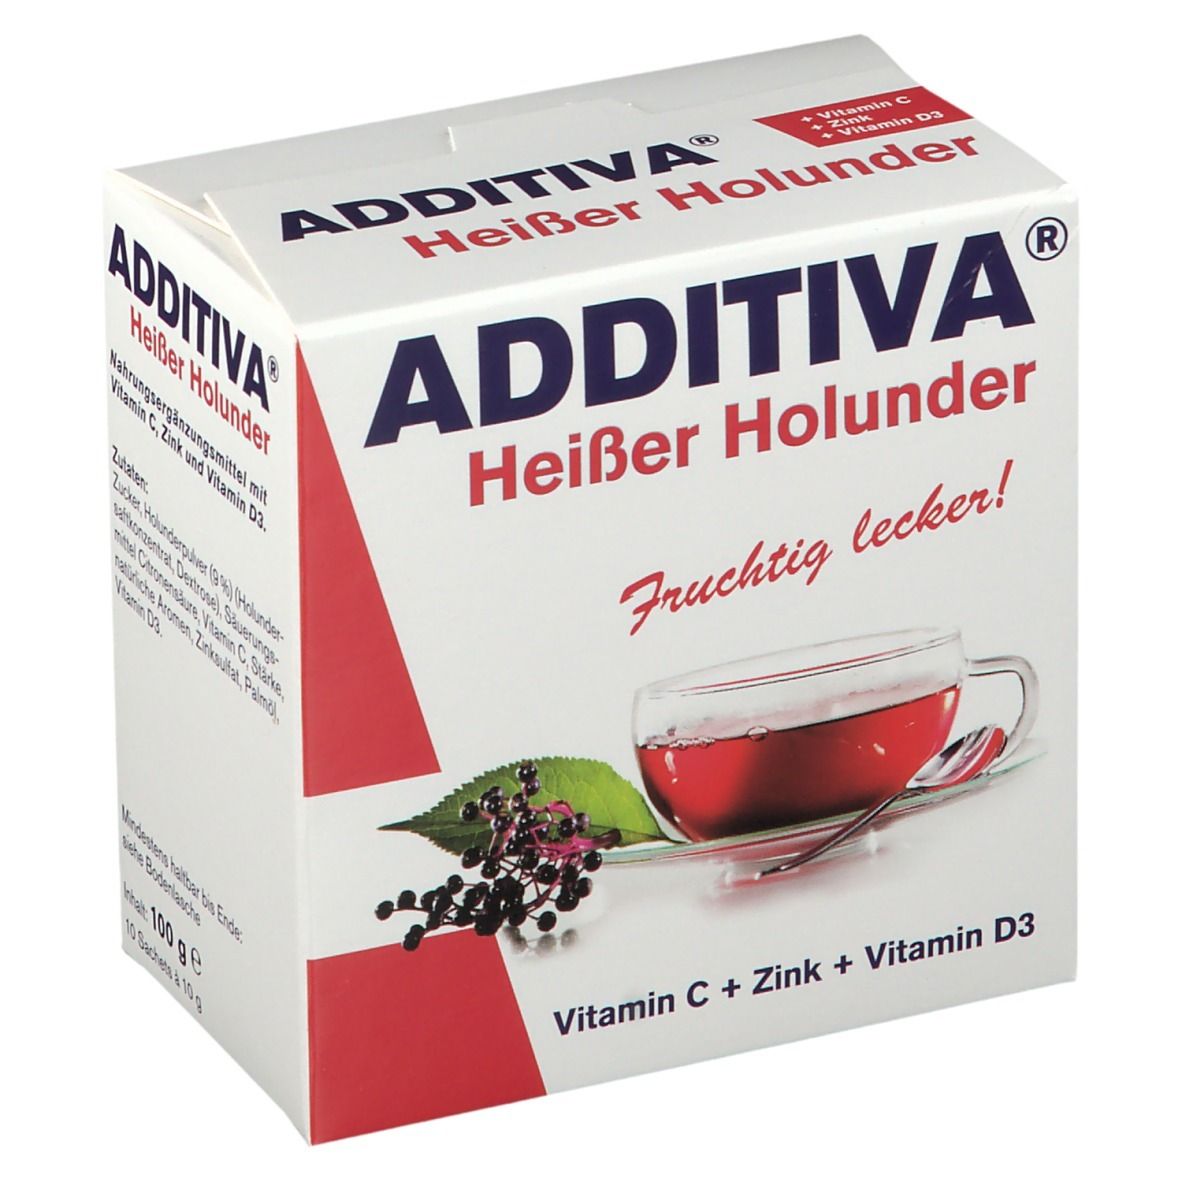 Additiva® hot elderberry